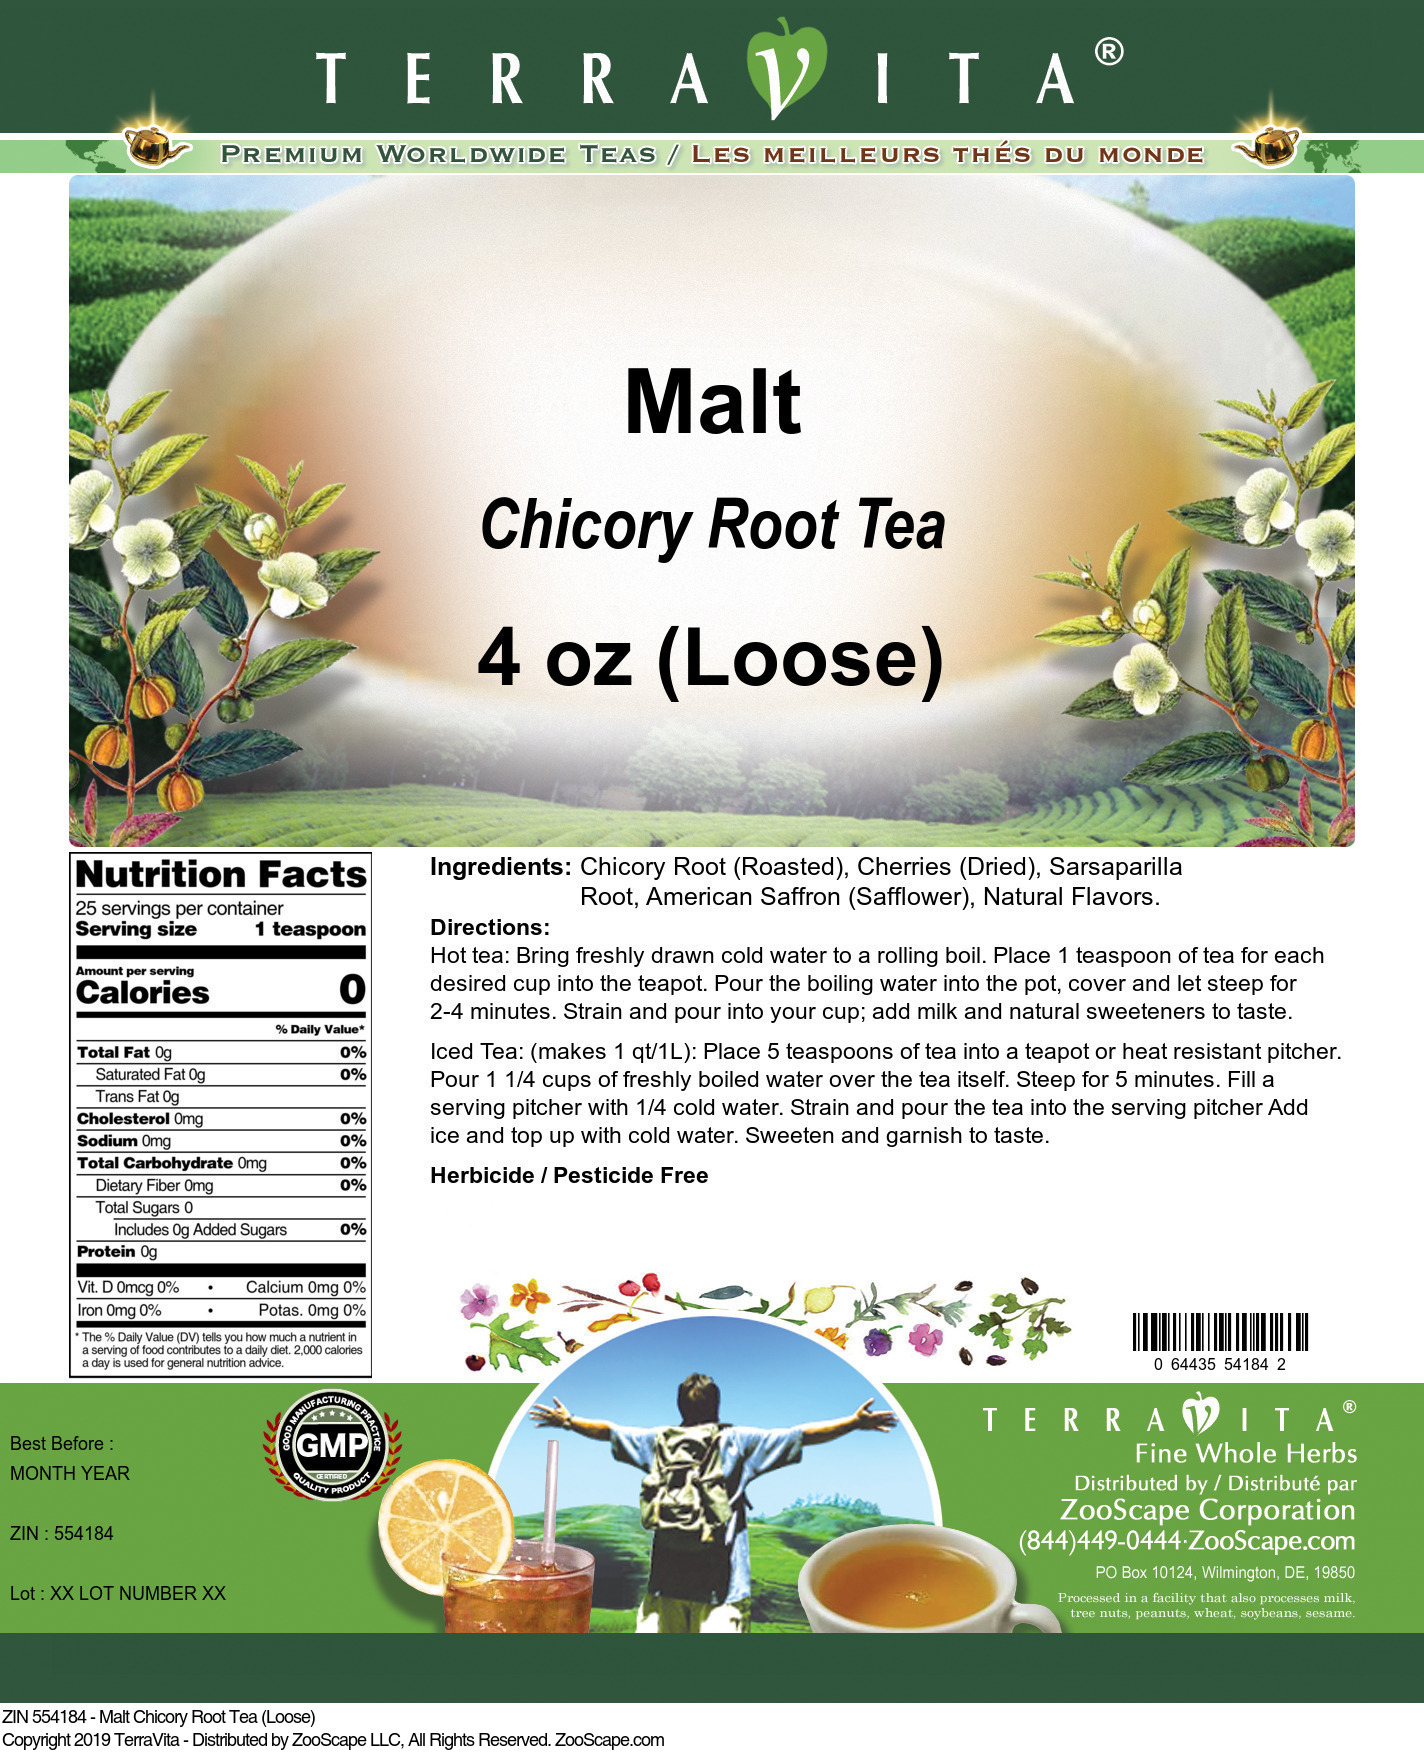 Malt Chicory Root Tea (Loose) - Label